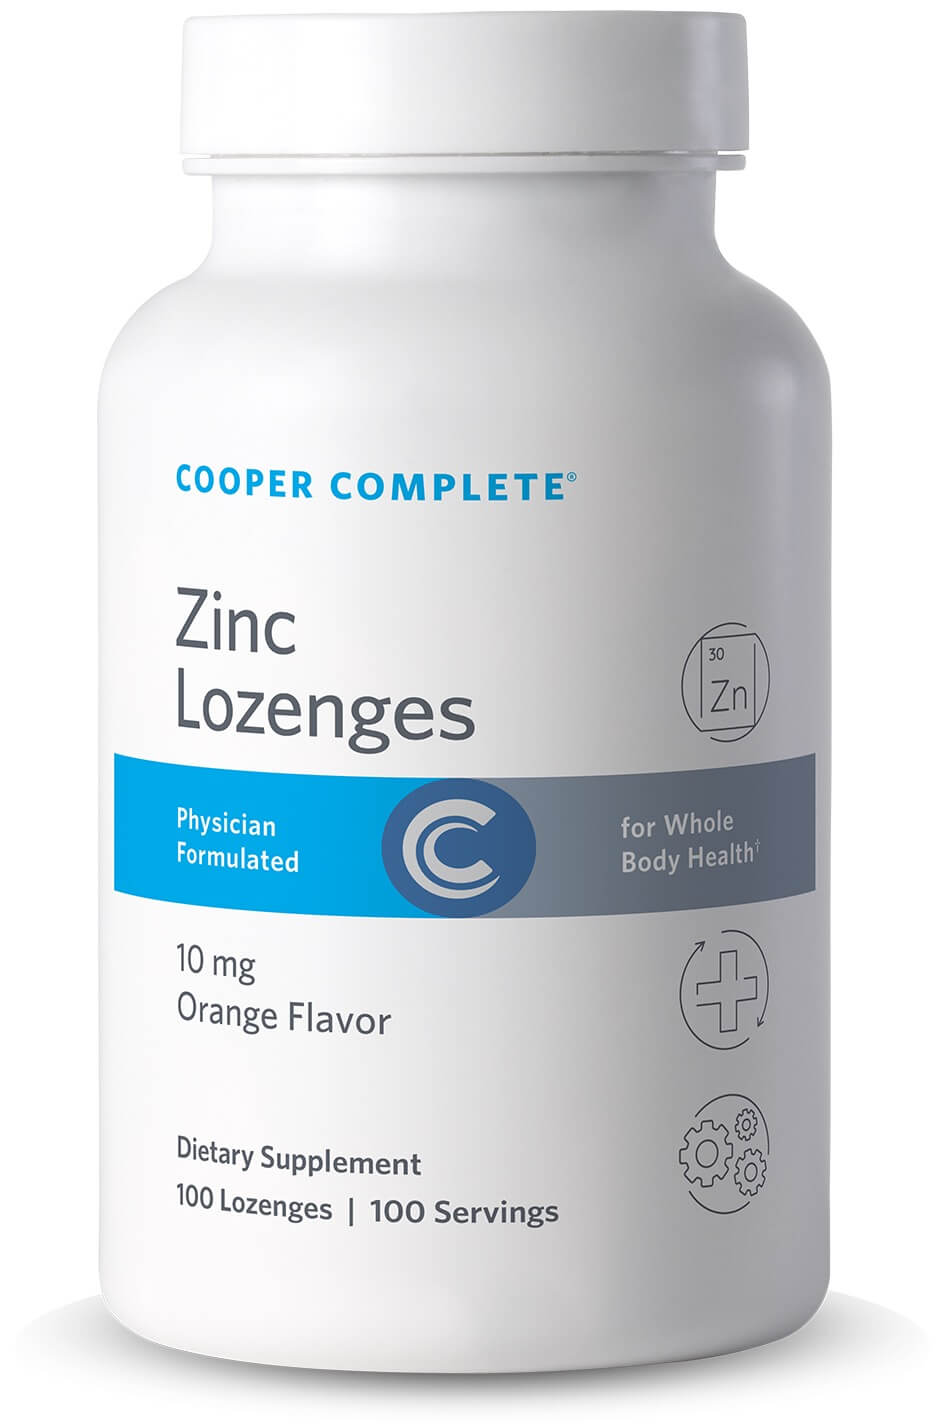 Photo of Cooper Complete Advanced Zinc Lozenges 10 mg supplement bottle.